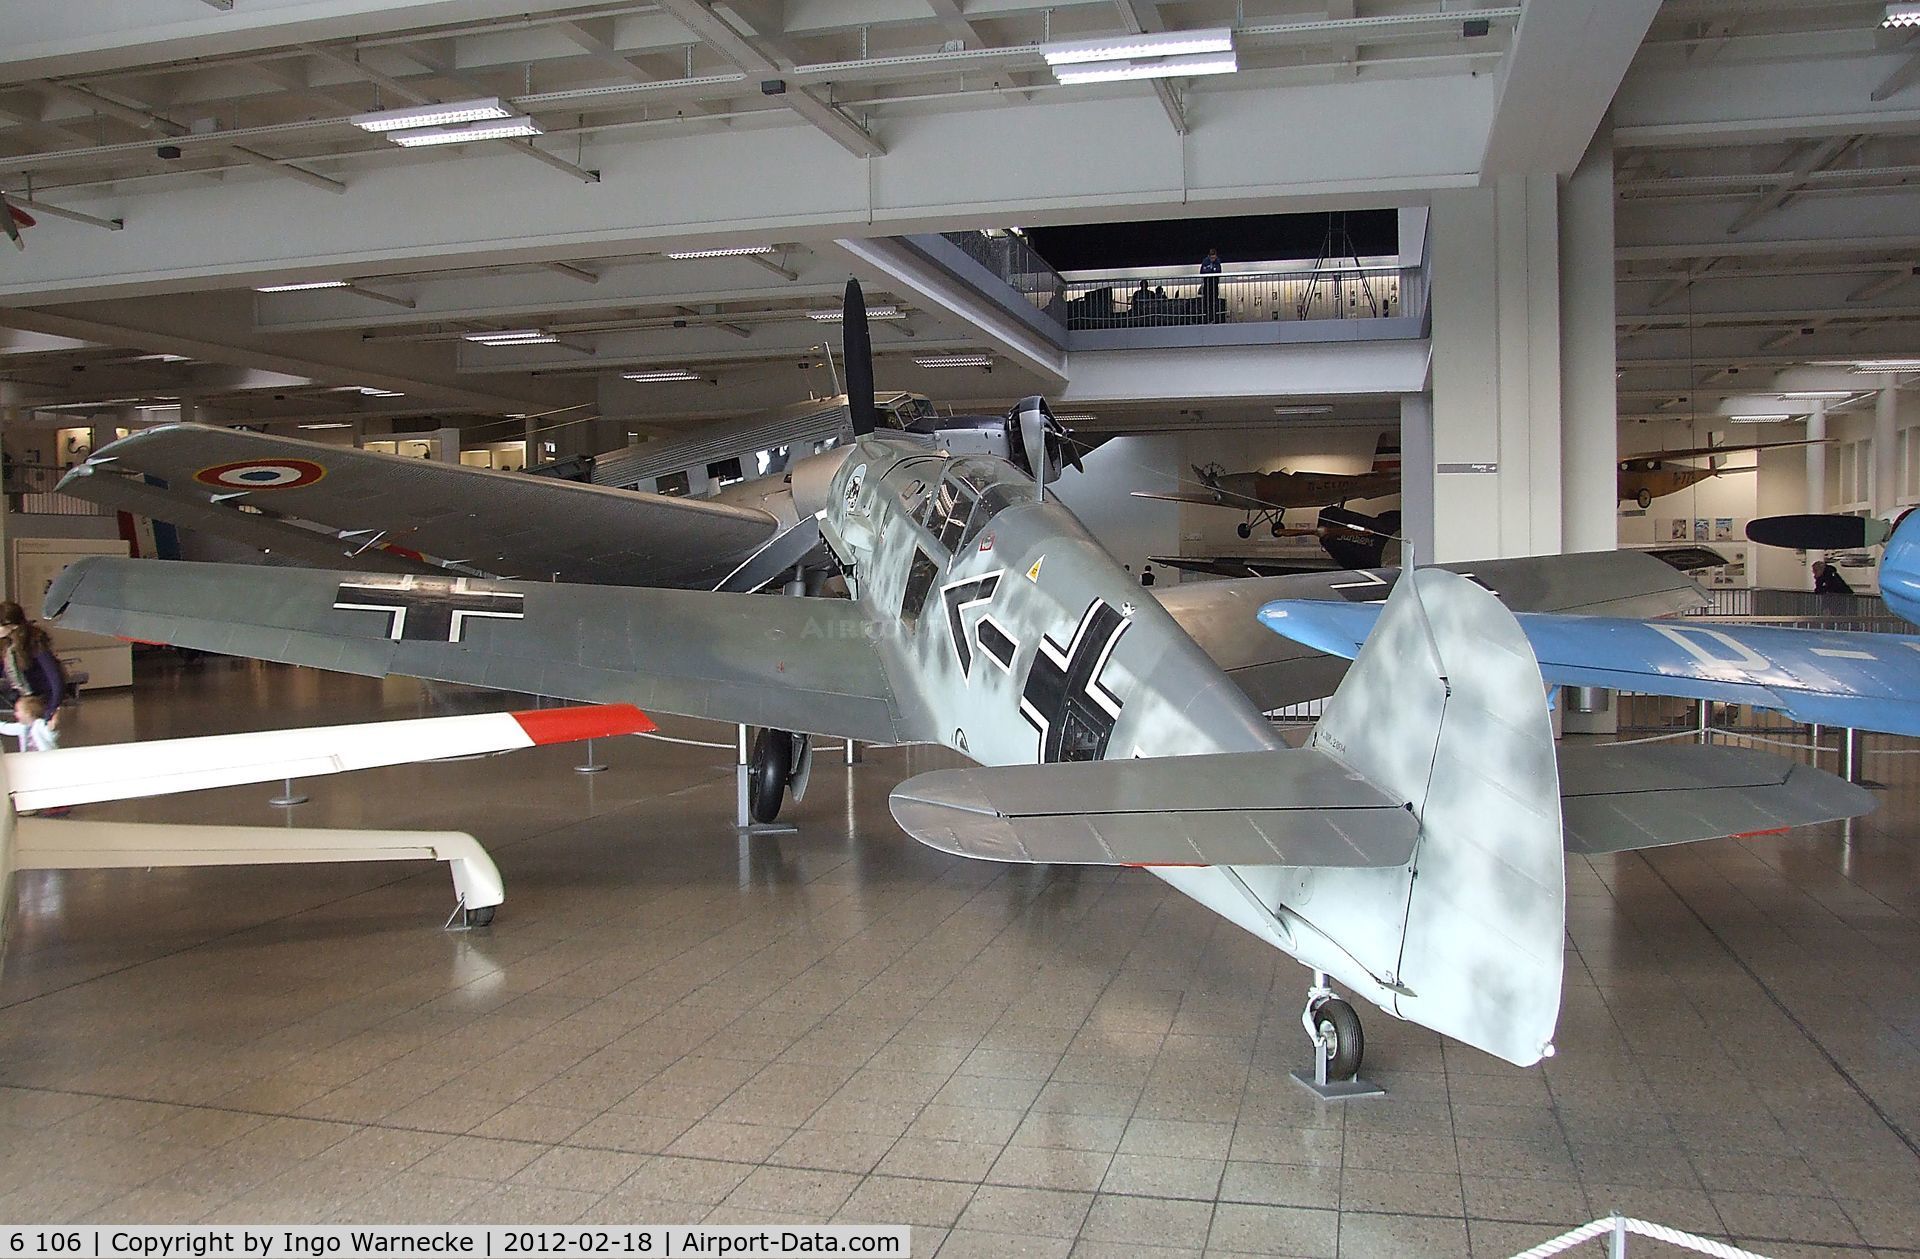 6 106, 1938 Messerschmitt Bf-109E-1 C/N 790, Messerschmitt Bf 109E-1, ex-Legion Condor, ex-Ejercito del Aire, displayed since 1973 in the markings of Werner Mölders' plane, at the Deutsches Museum, München (Munich)